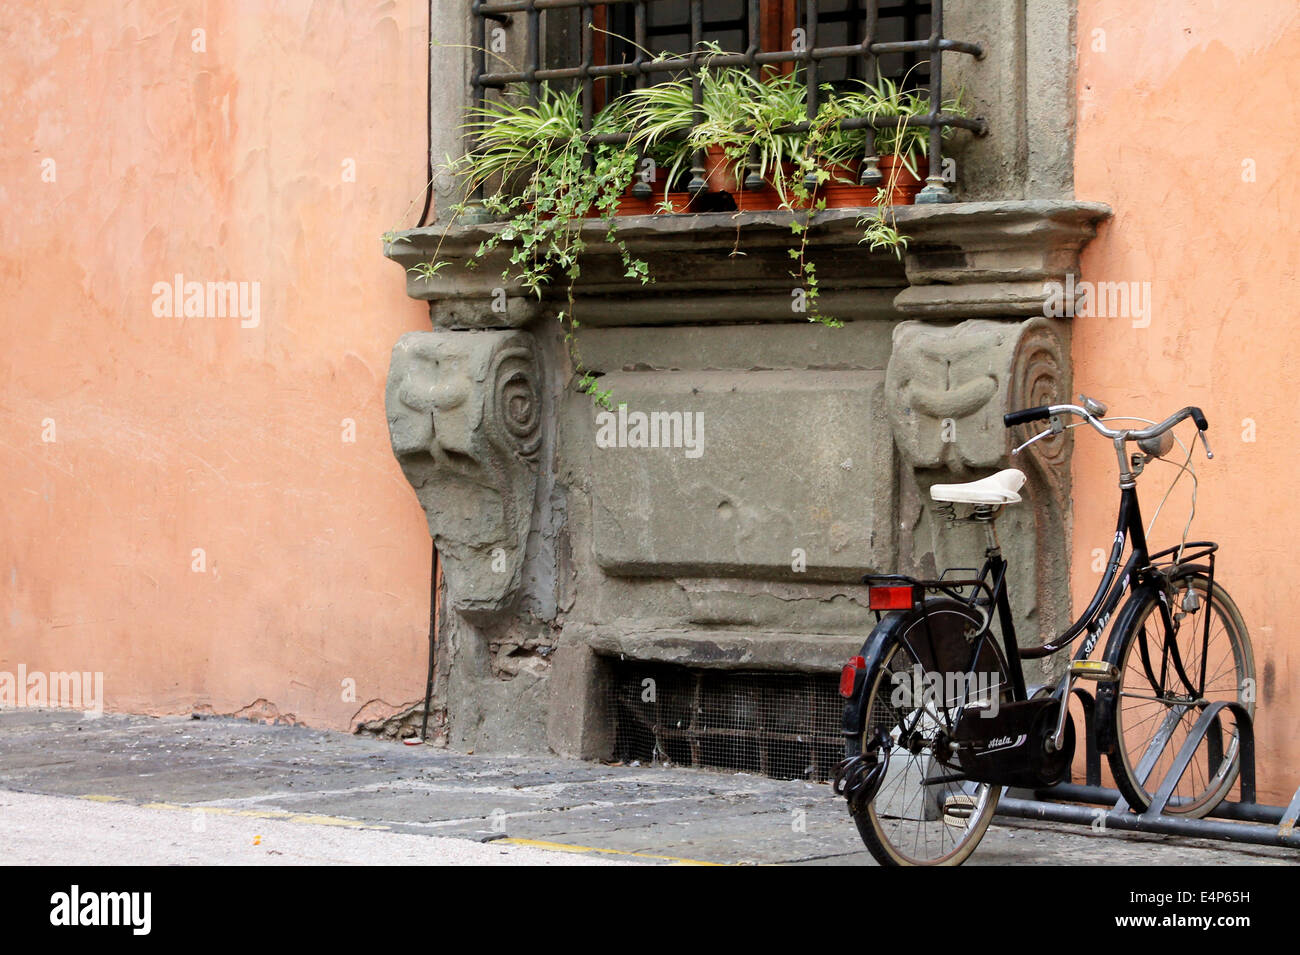 Tuscany Bike in Lucca bildende Kunst Stil Bild große Reisen Bild von Italien Toskana. Stockfoto